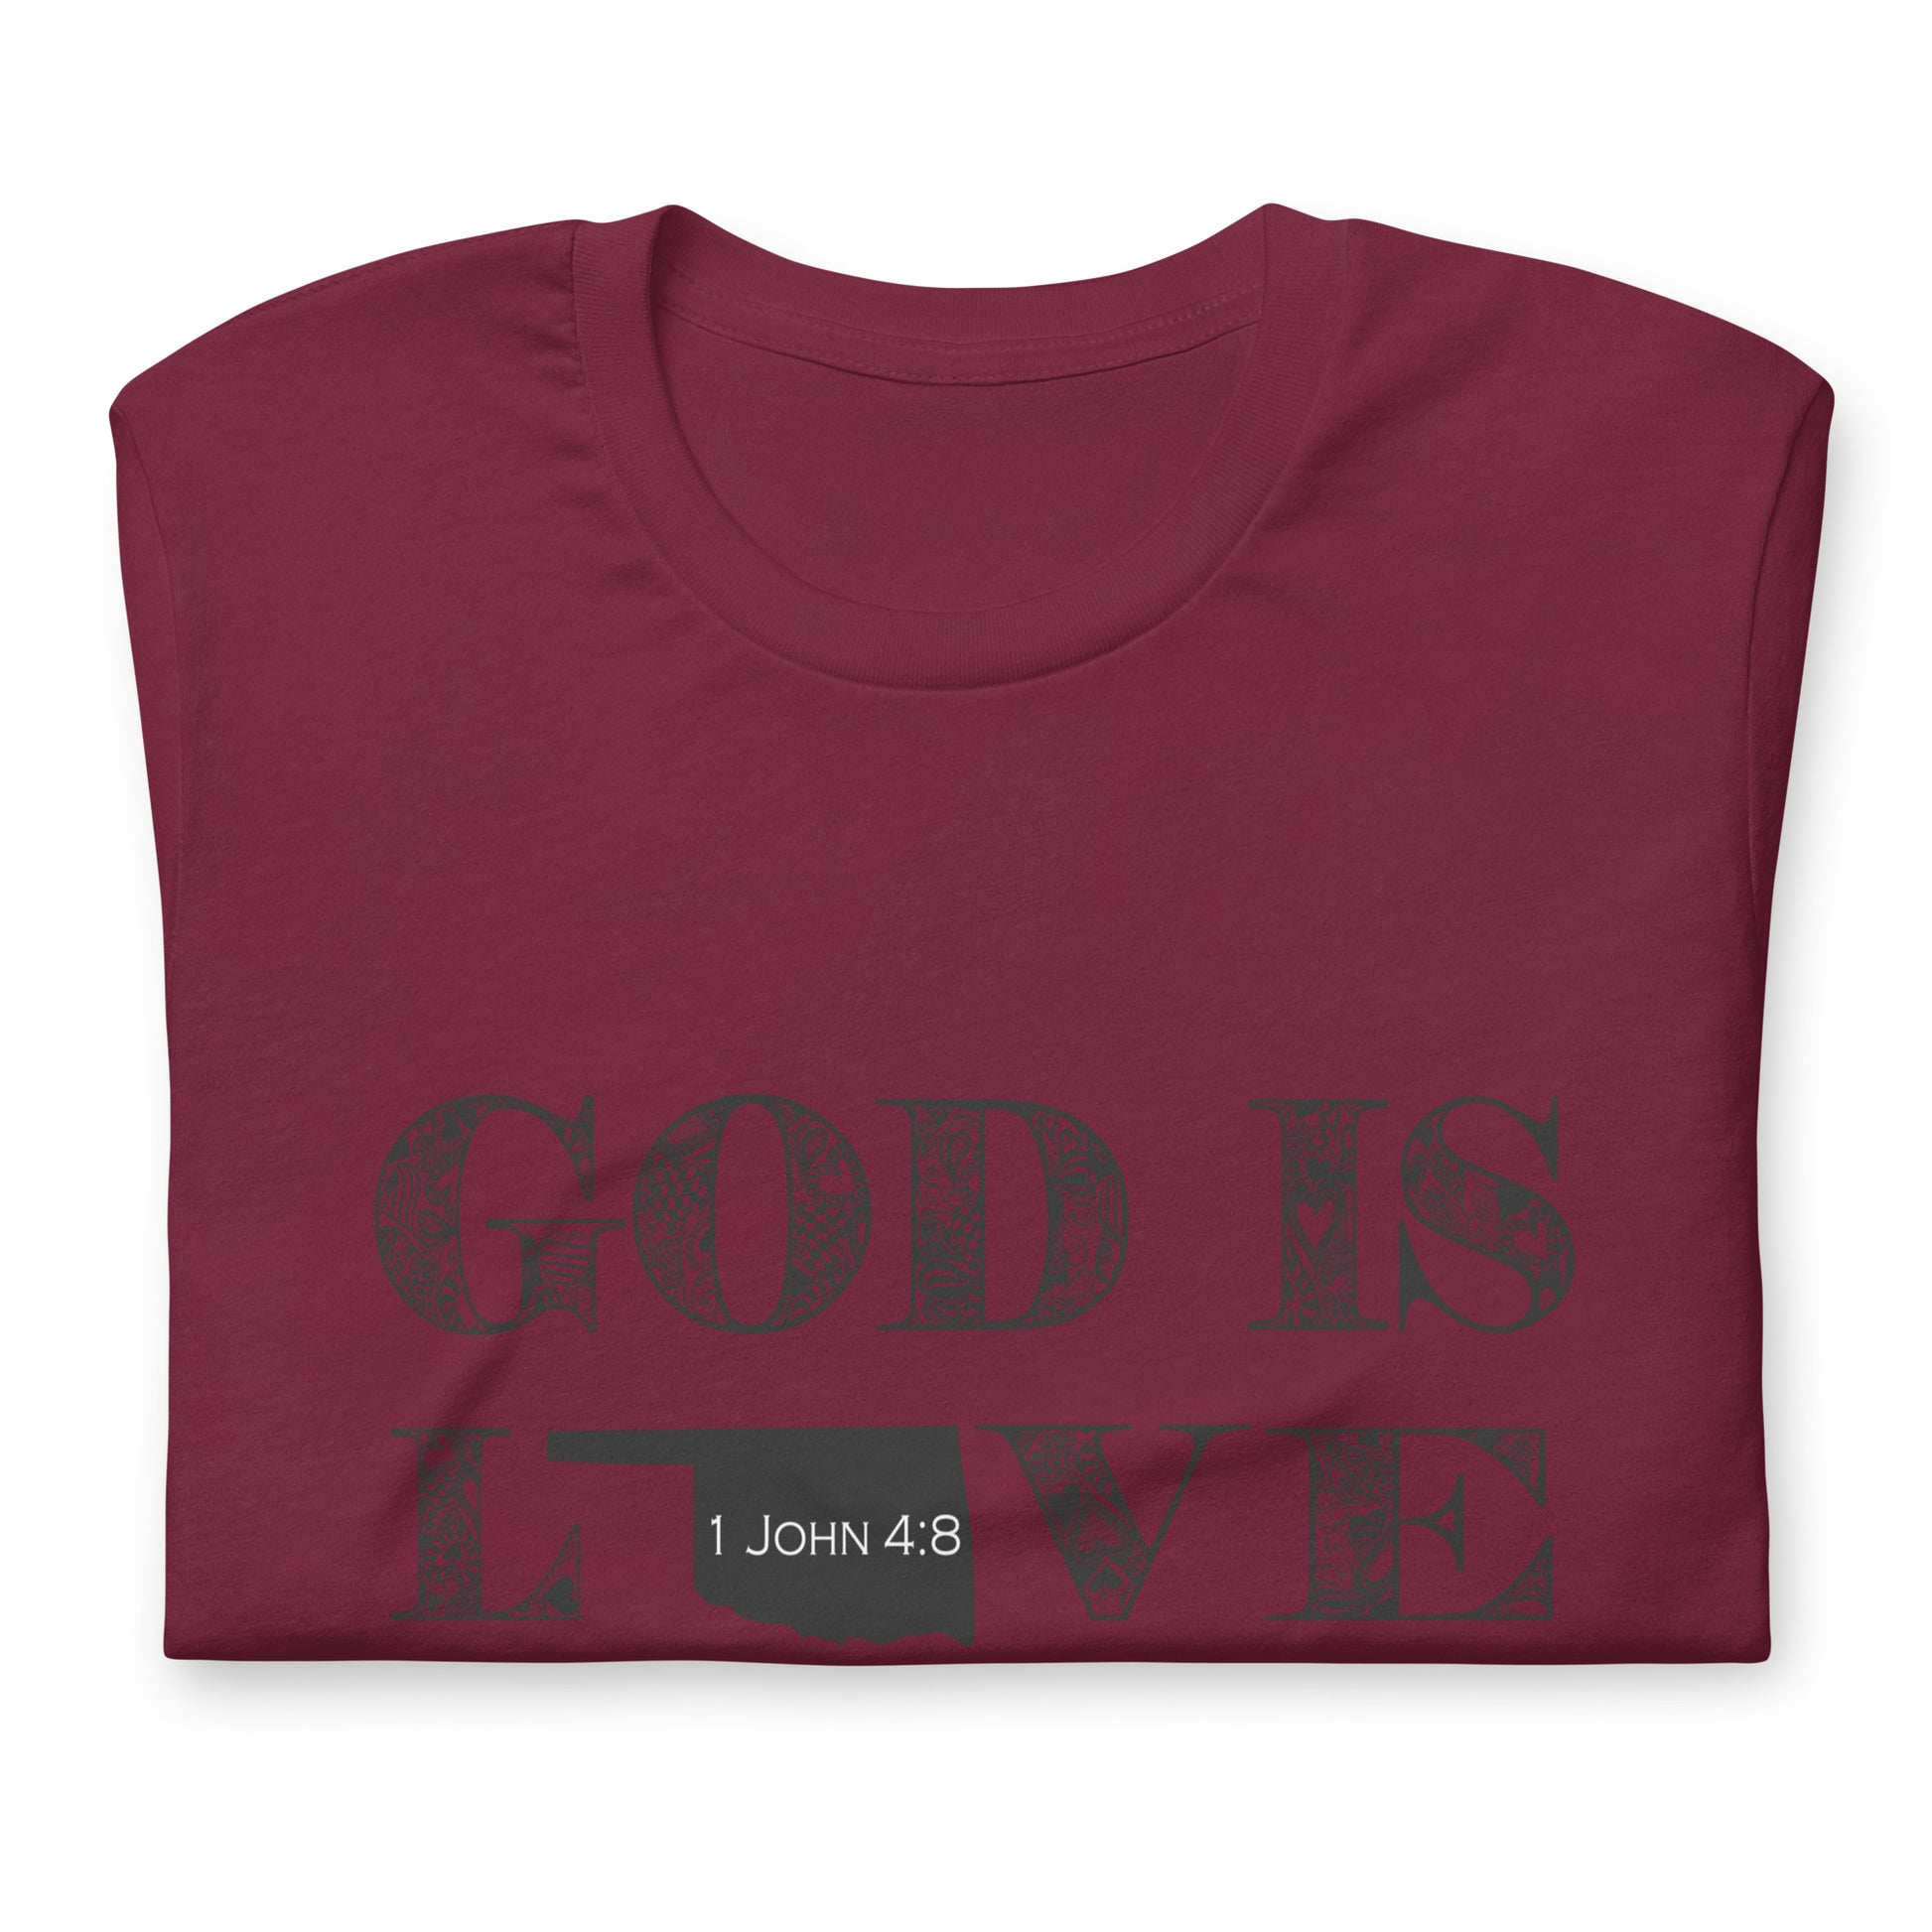 1 John 4:8 God is Love Unisex Oklahoma T-shirt in Maroon - front view folded